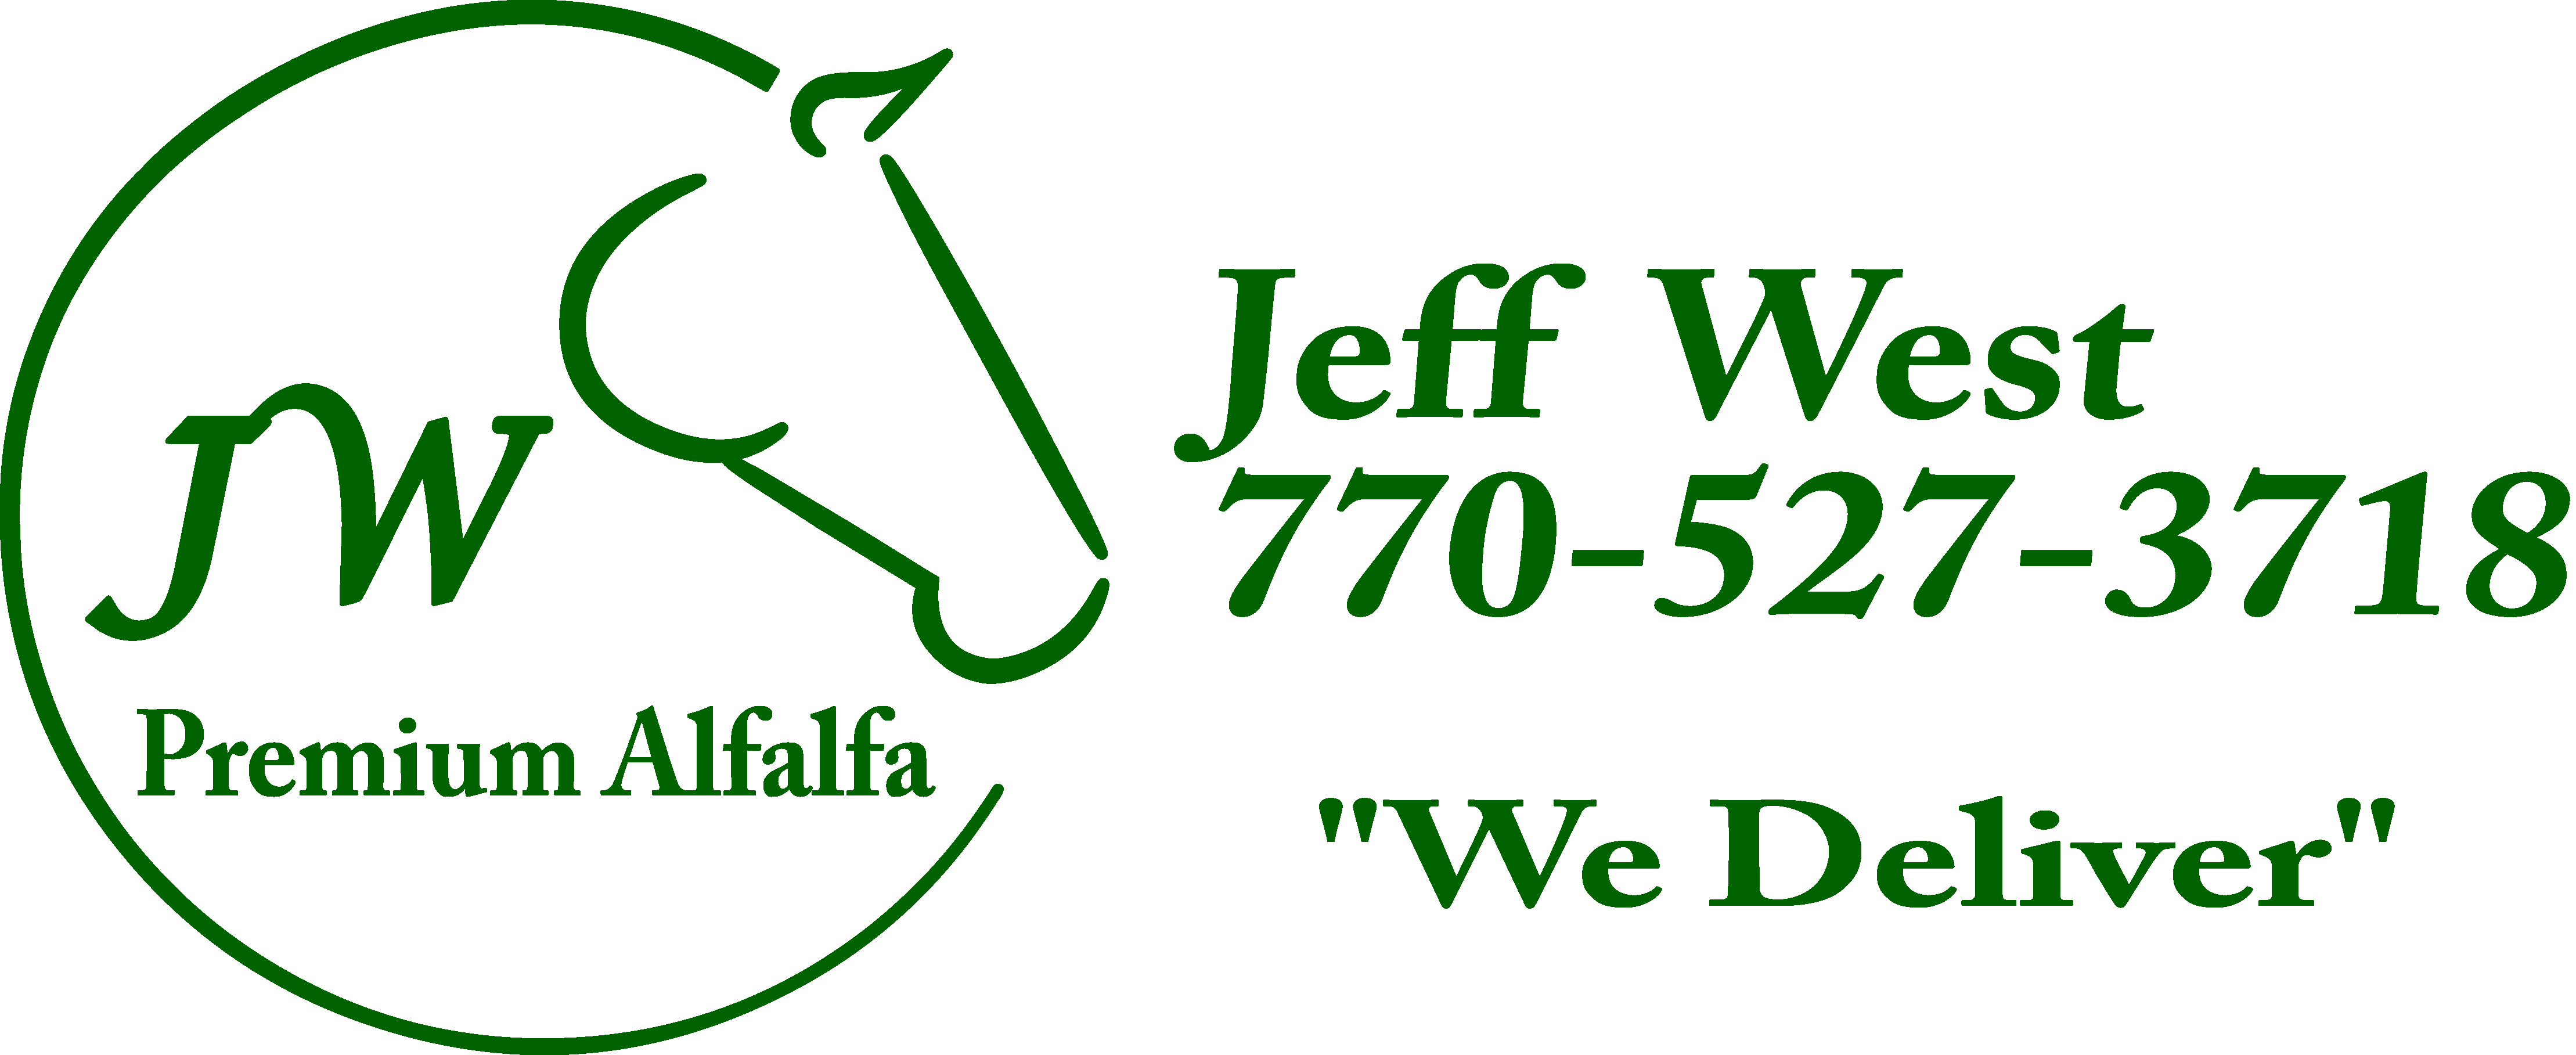 Jeff West Alfalfa